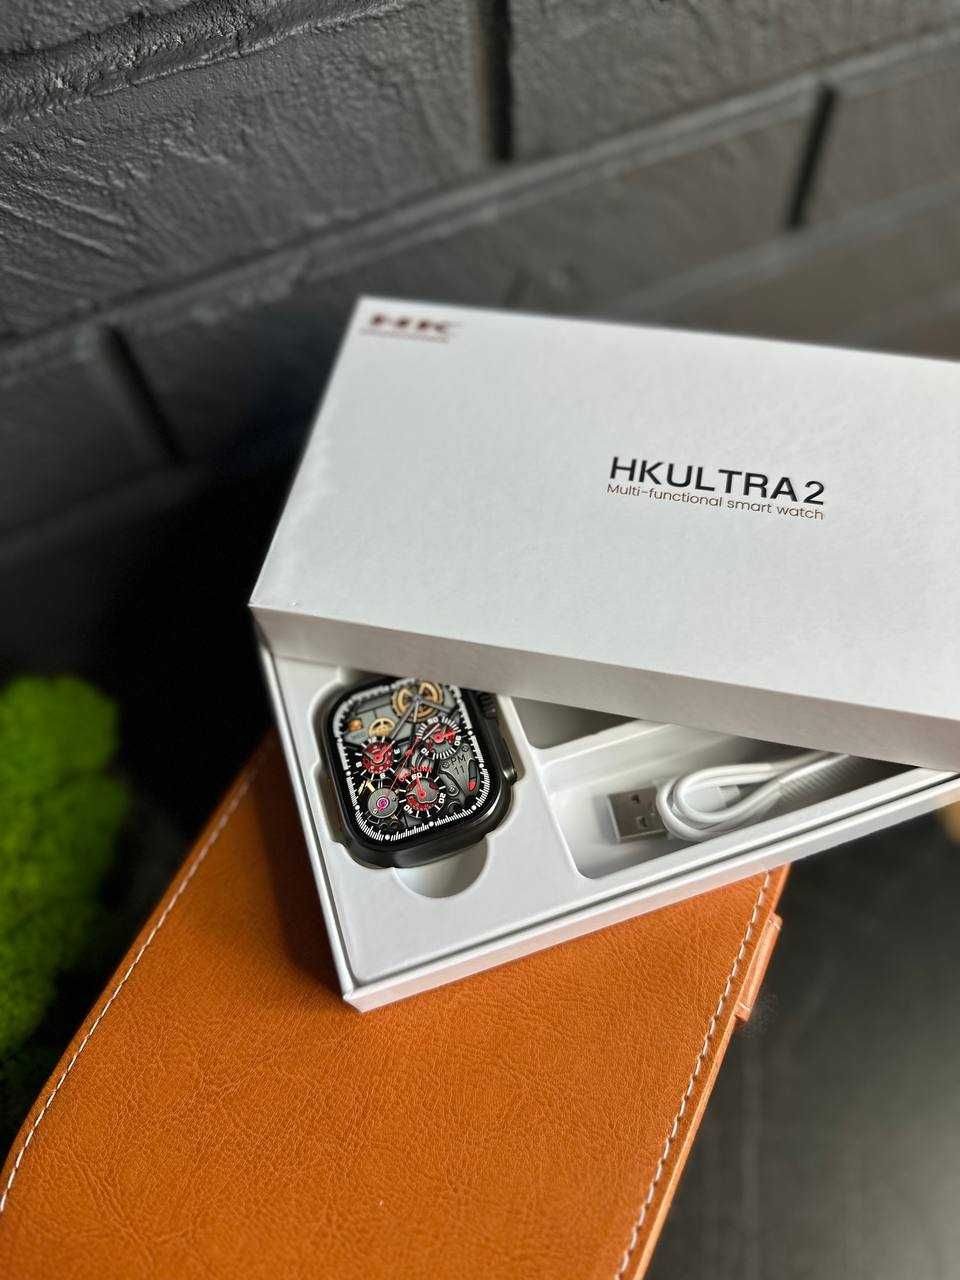 Опт/Дроп Годинник Преміум якості Smart Watch Hk Ultra2 49mm